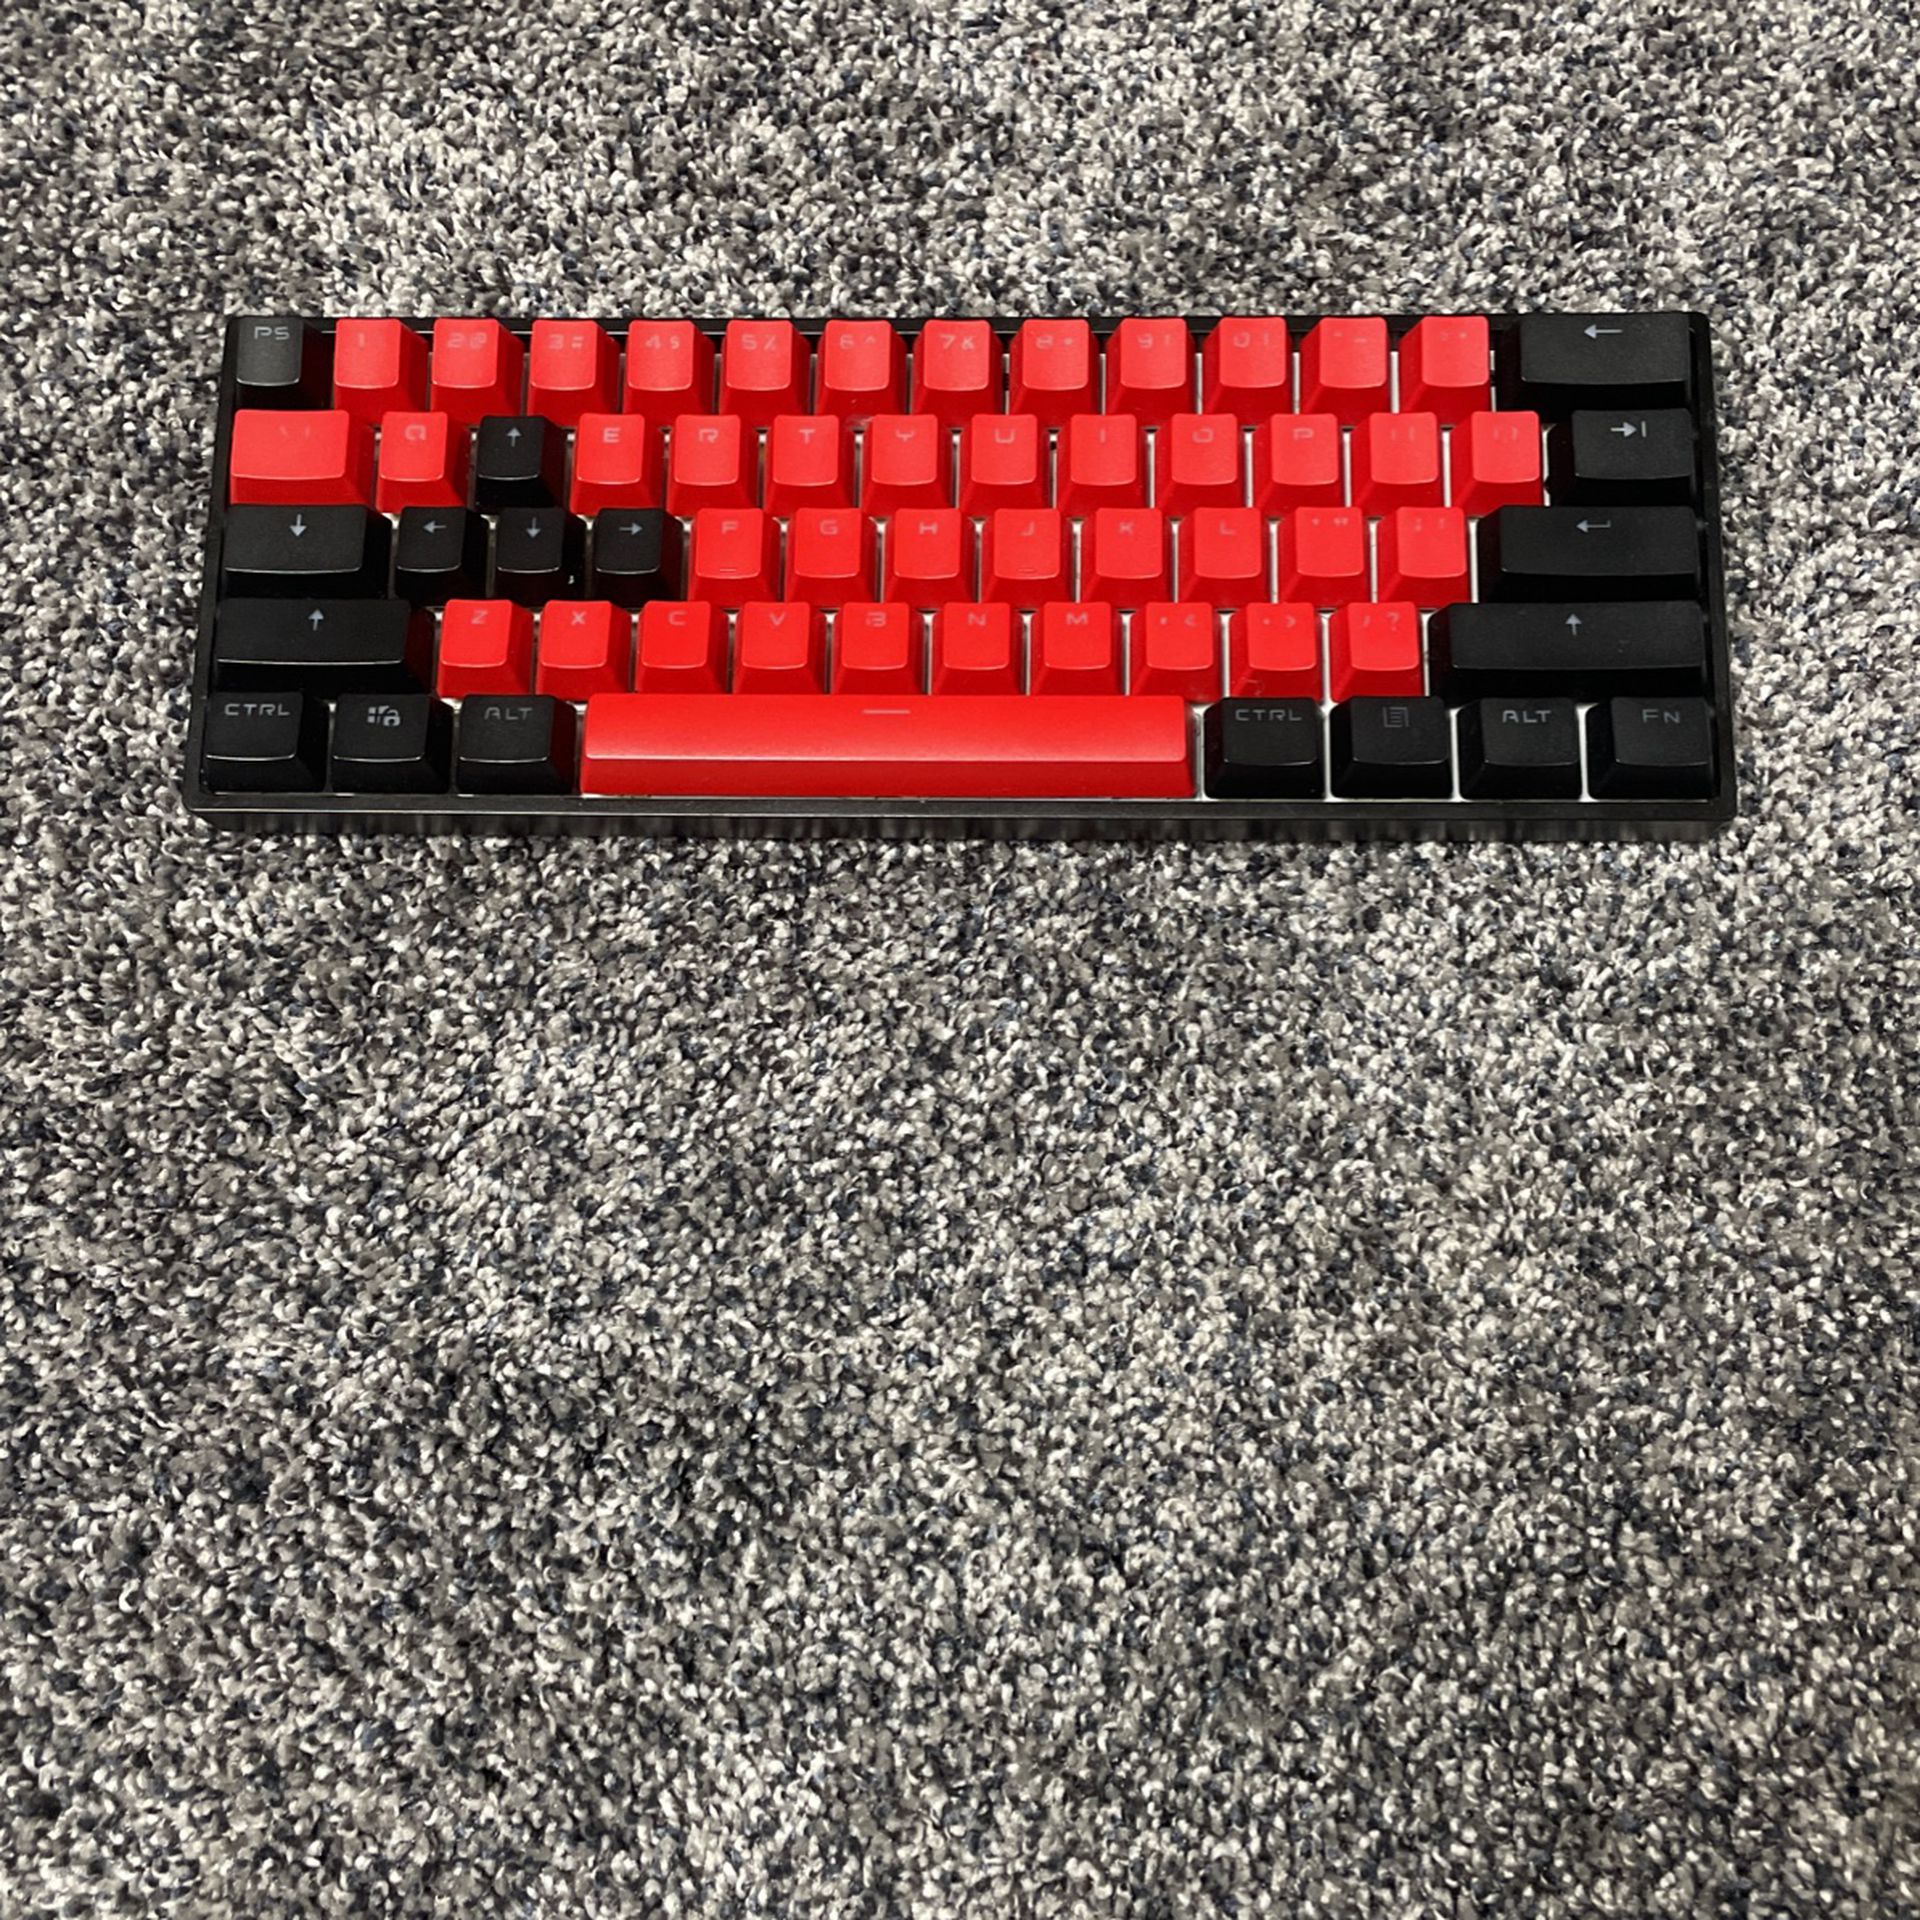 Keyboard 60%